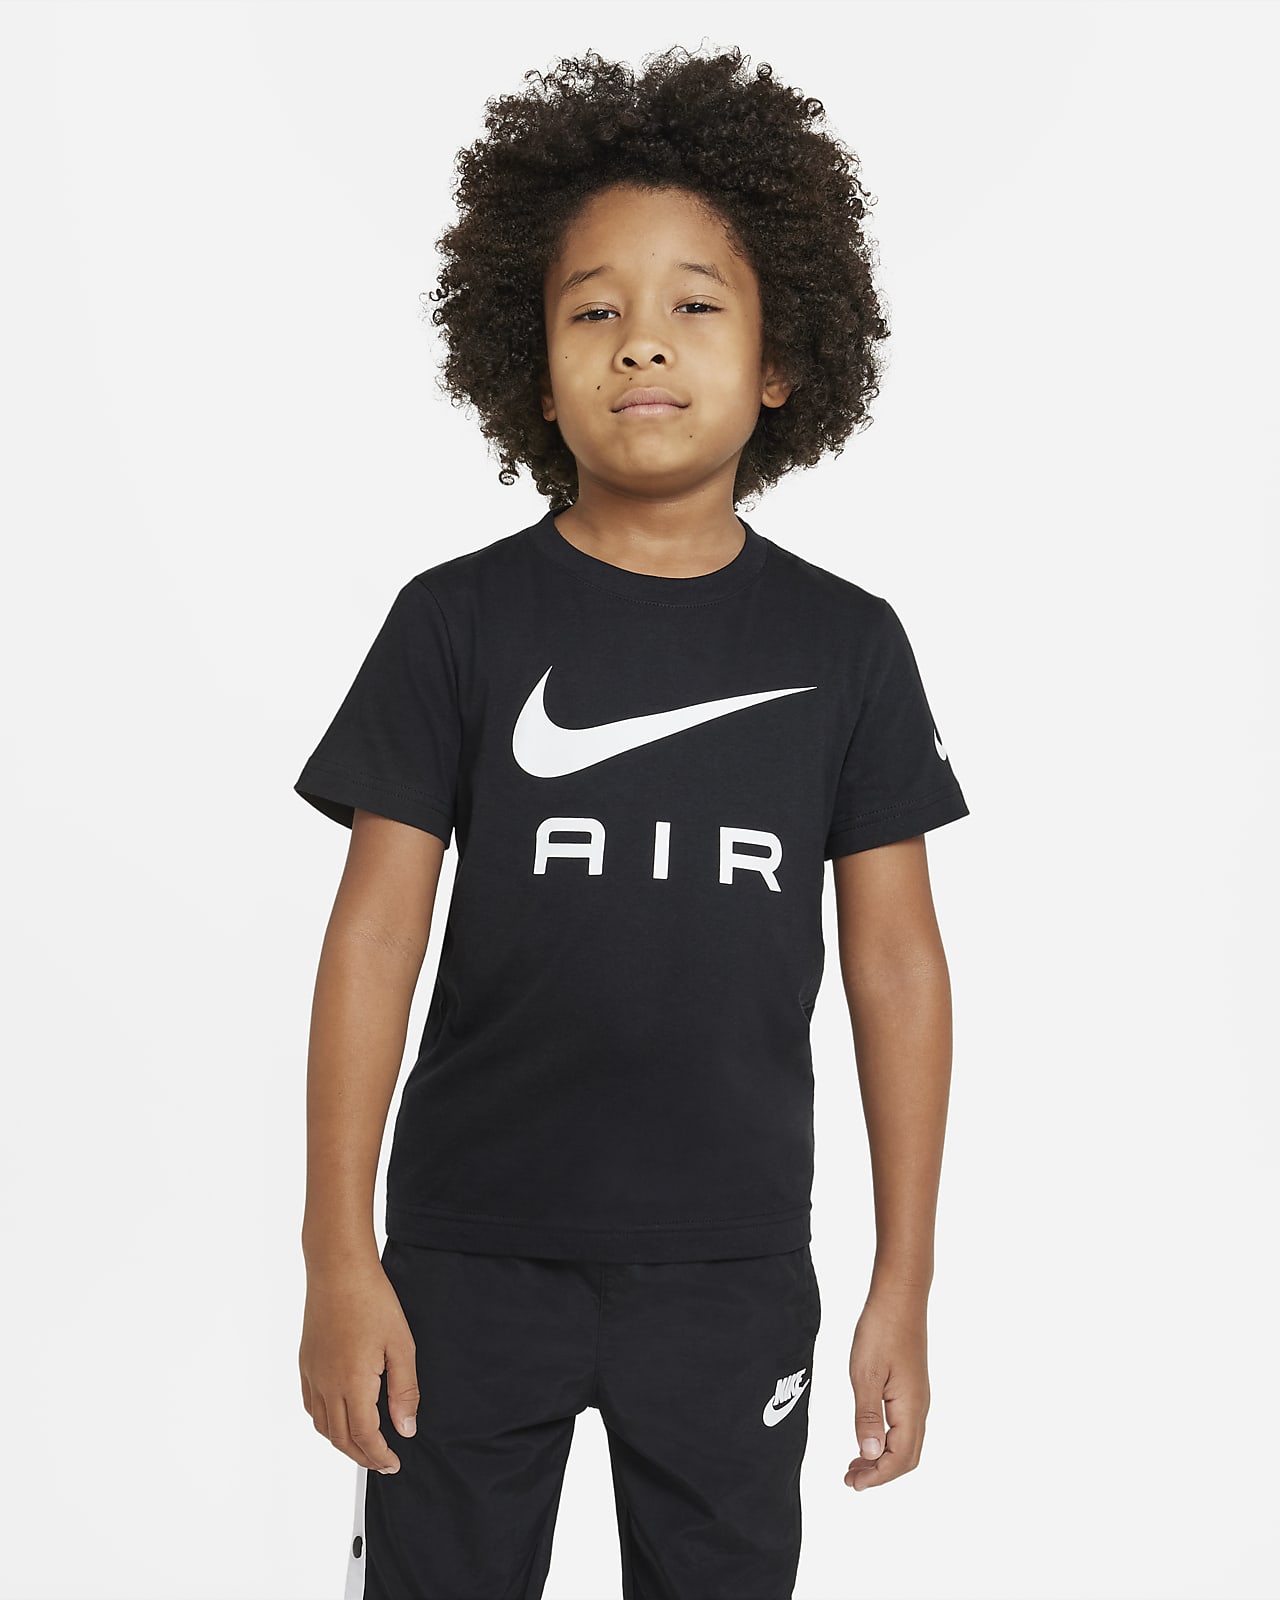 aluminio Observación Comerciante itinerante Nike Little Kids' Nike Air T-Shirt. Nike.com